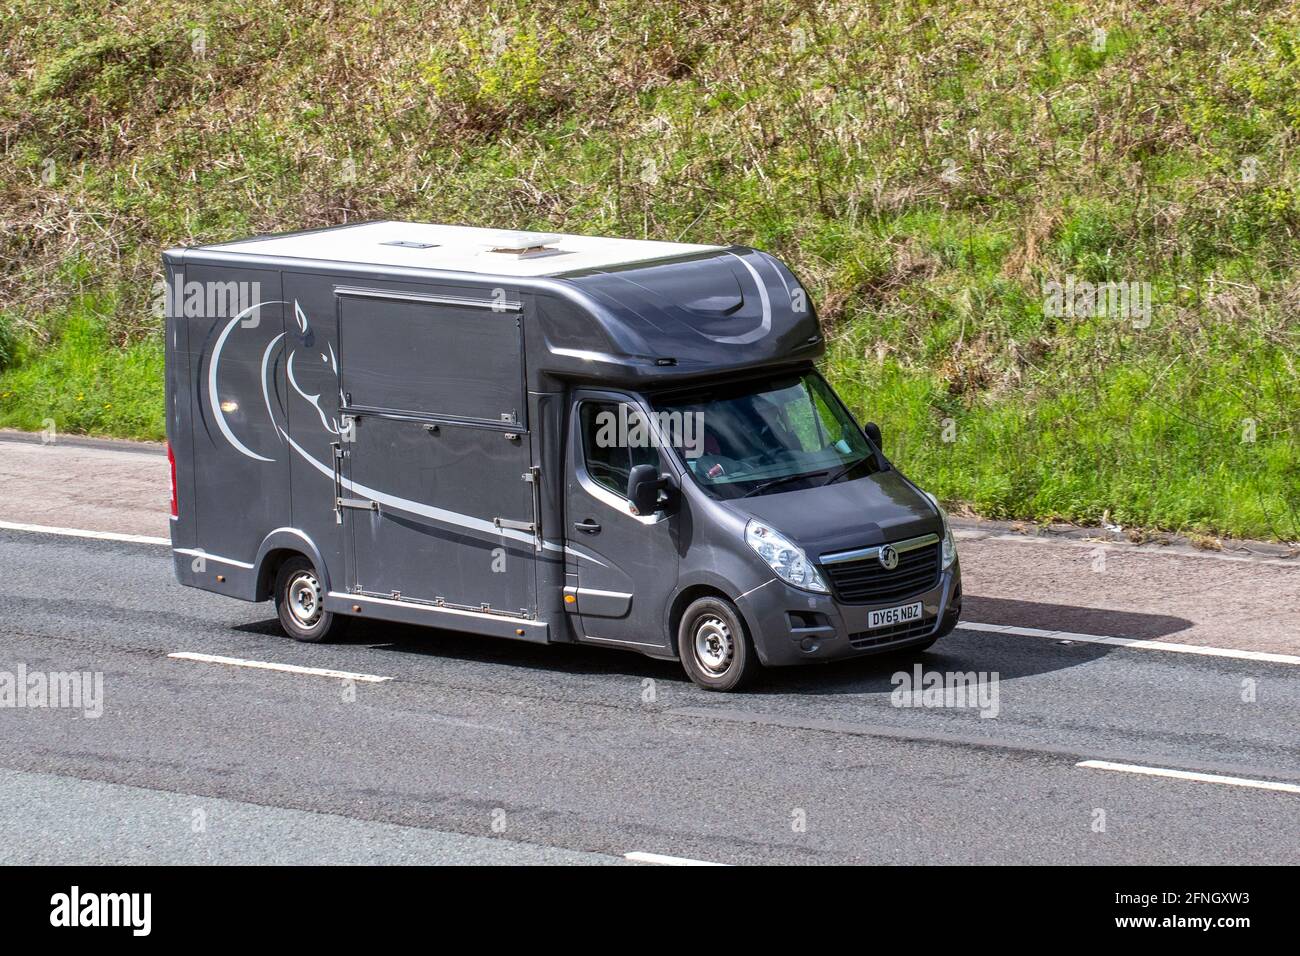 2015 Vauxhall Movano F3500 L3h2 Cdti; horsebox van; Coach-built van conversion equine animal transport travelling on the M6 motorway, Lancashire, UK Stock Photo